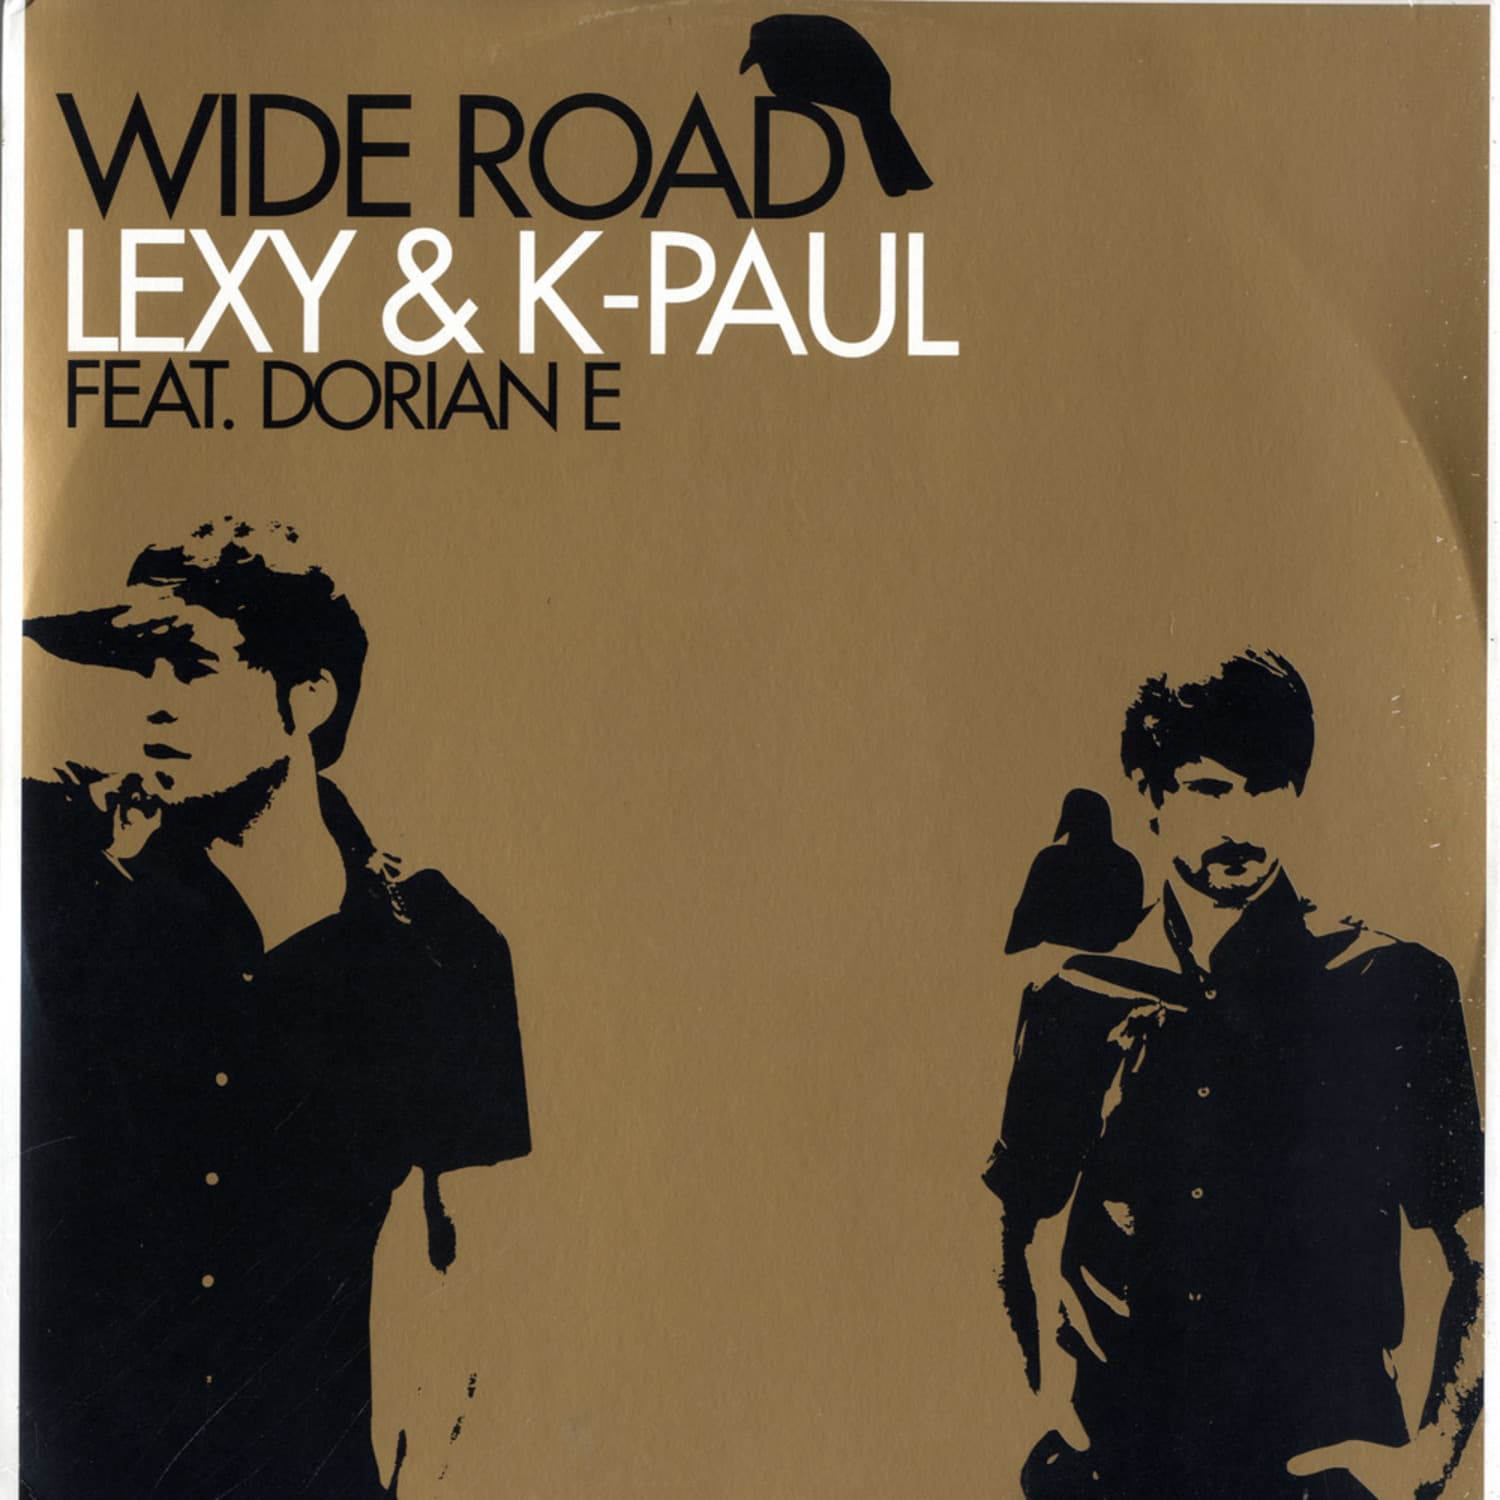 Lexy & K-Paul feat. Dorian E - WIDE ROAD